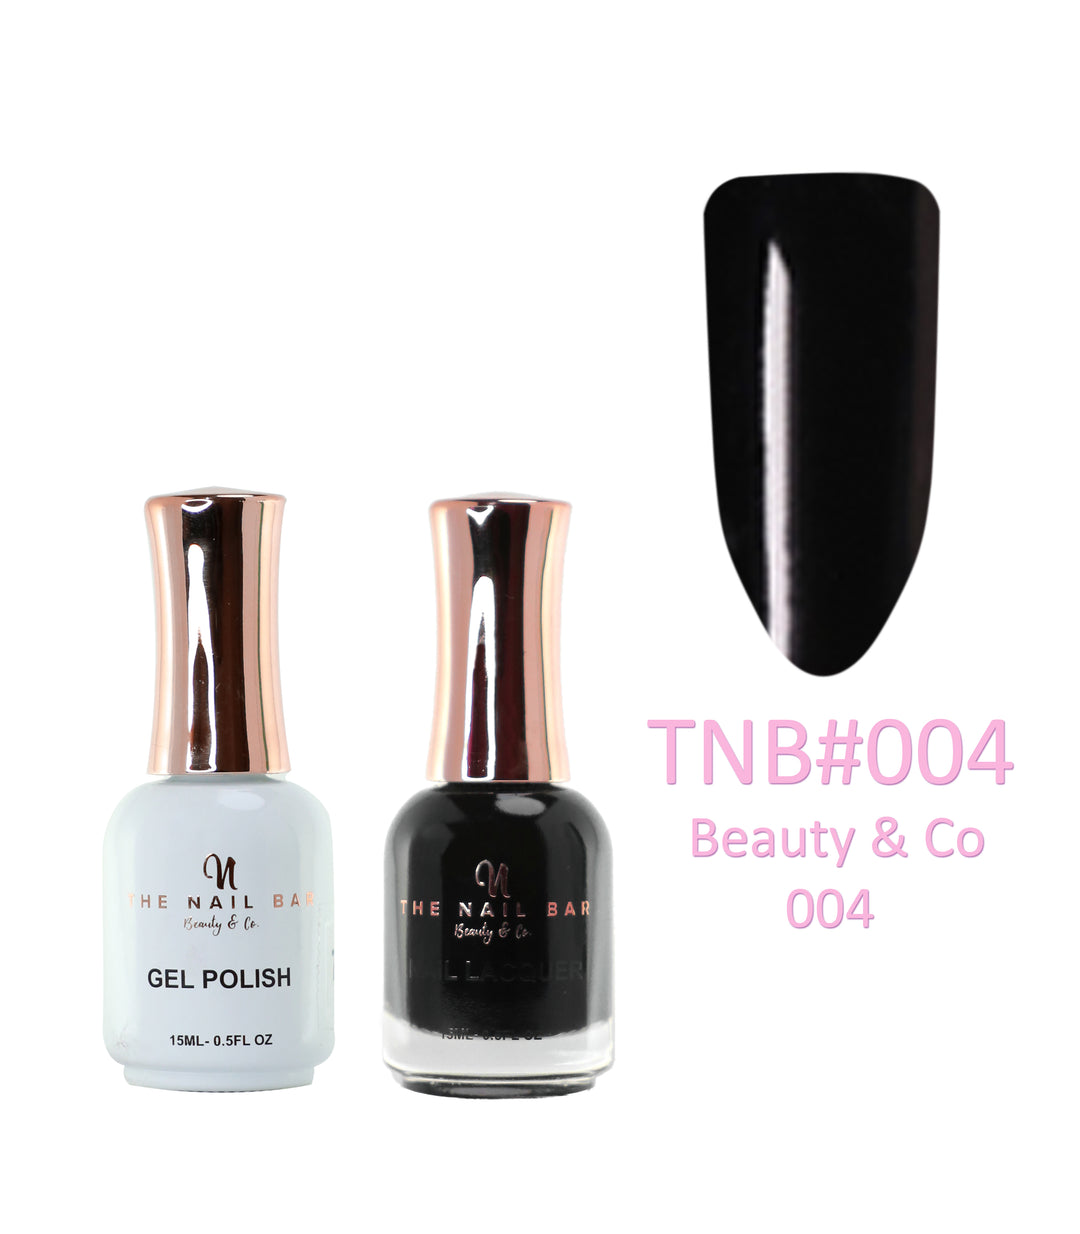 Dual Polish/Gel colour matching (15ml) -  Beauty & Co 004 - The Nail Bar Beauty & Co.